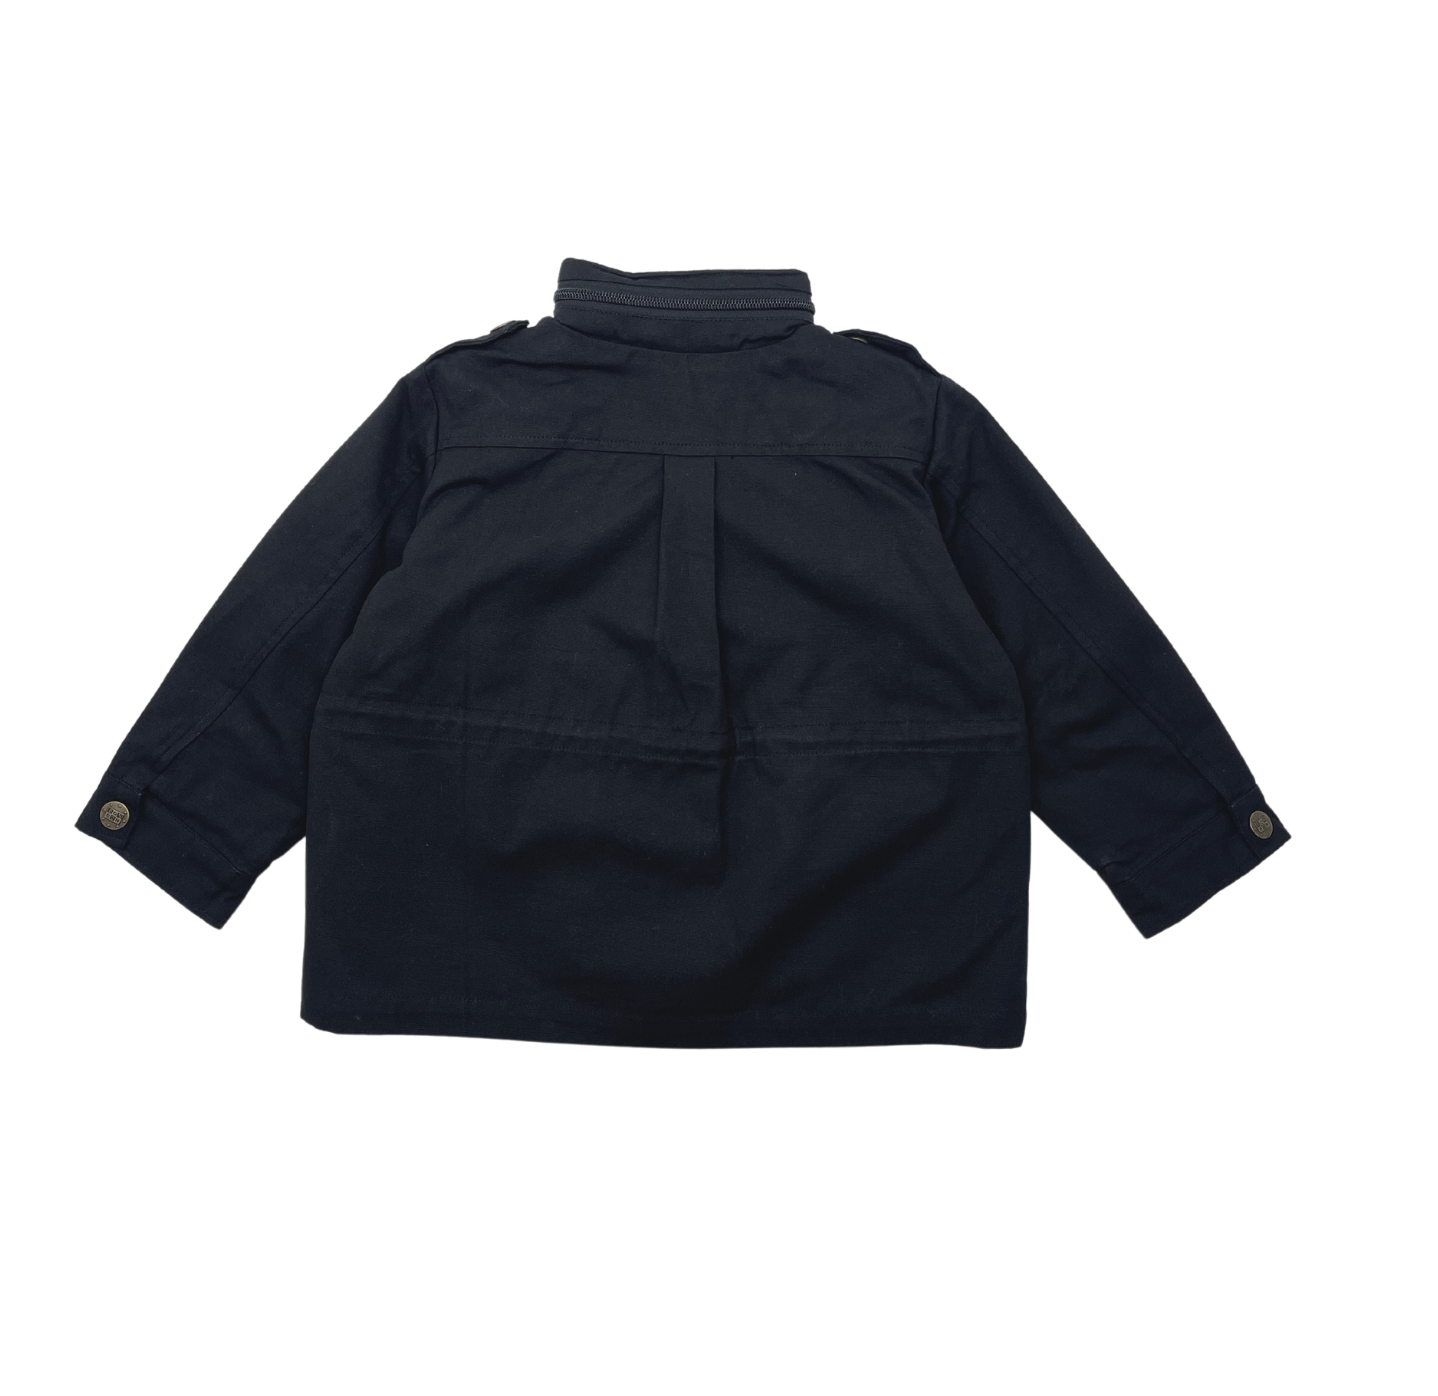 BONTON - Black jacket, removable lining, hood - 4 years old